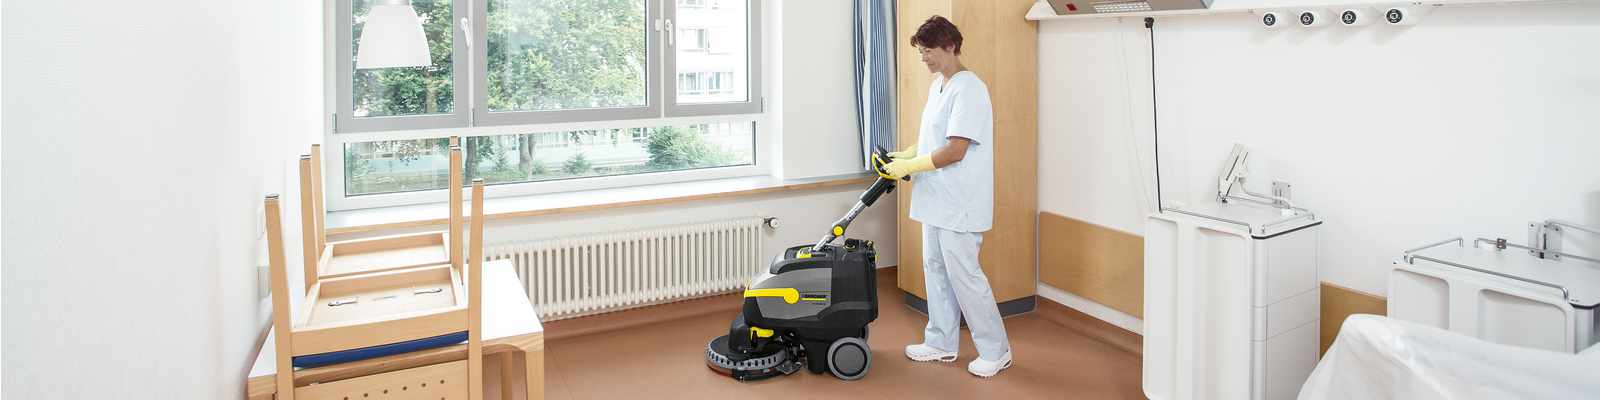 Kärcher Scrubber dryer cleaning a hospital floor